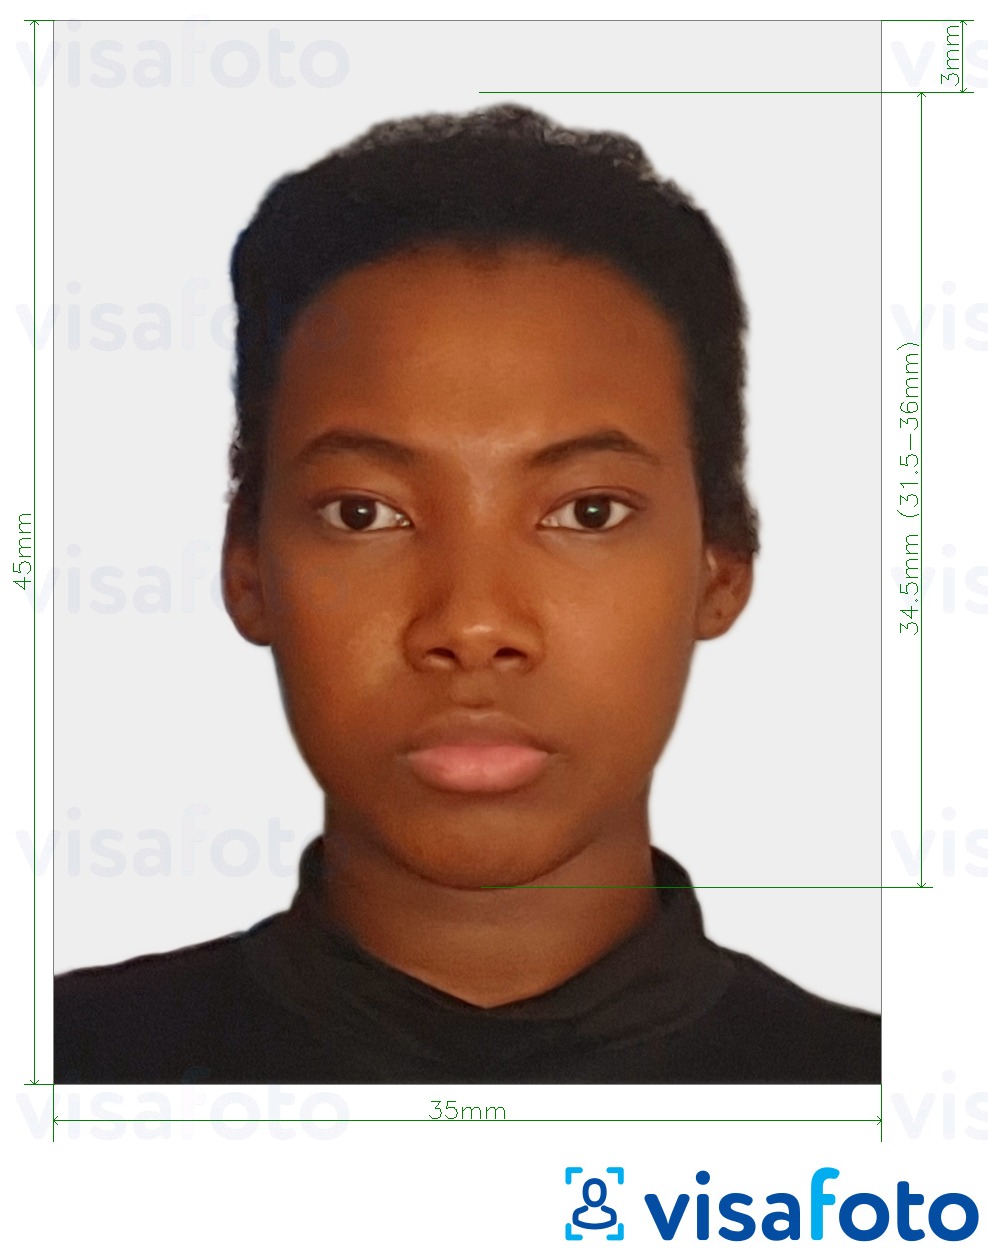 Saint Kitts and Nevis паспортын зураг 35x45 мм (1.77x1.38 инч) Болоцоот зургийн жишээ